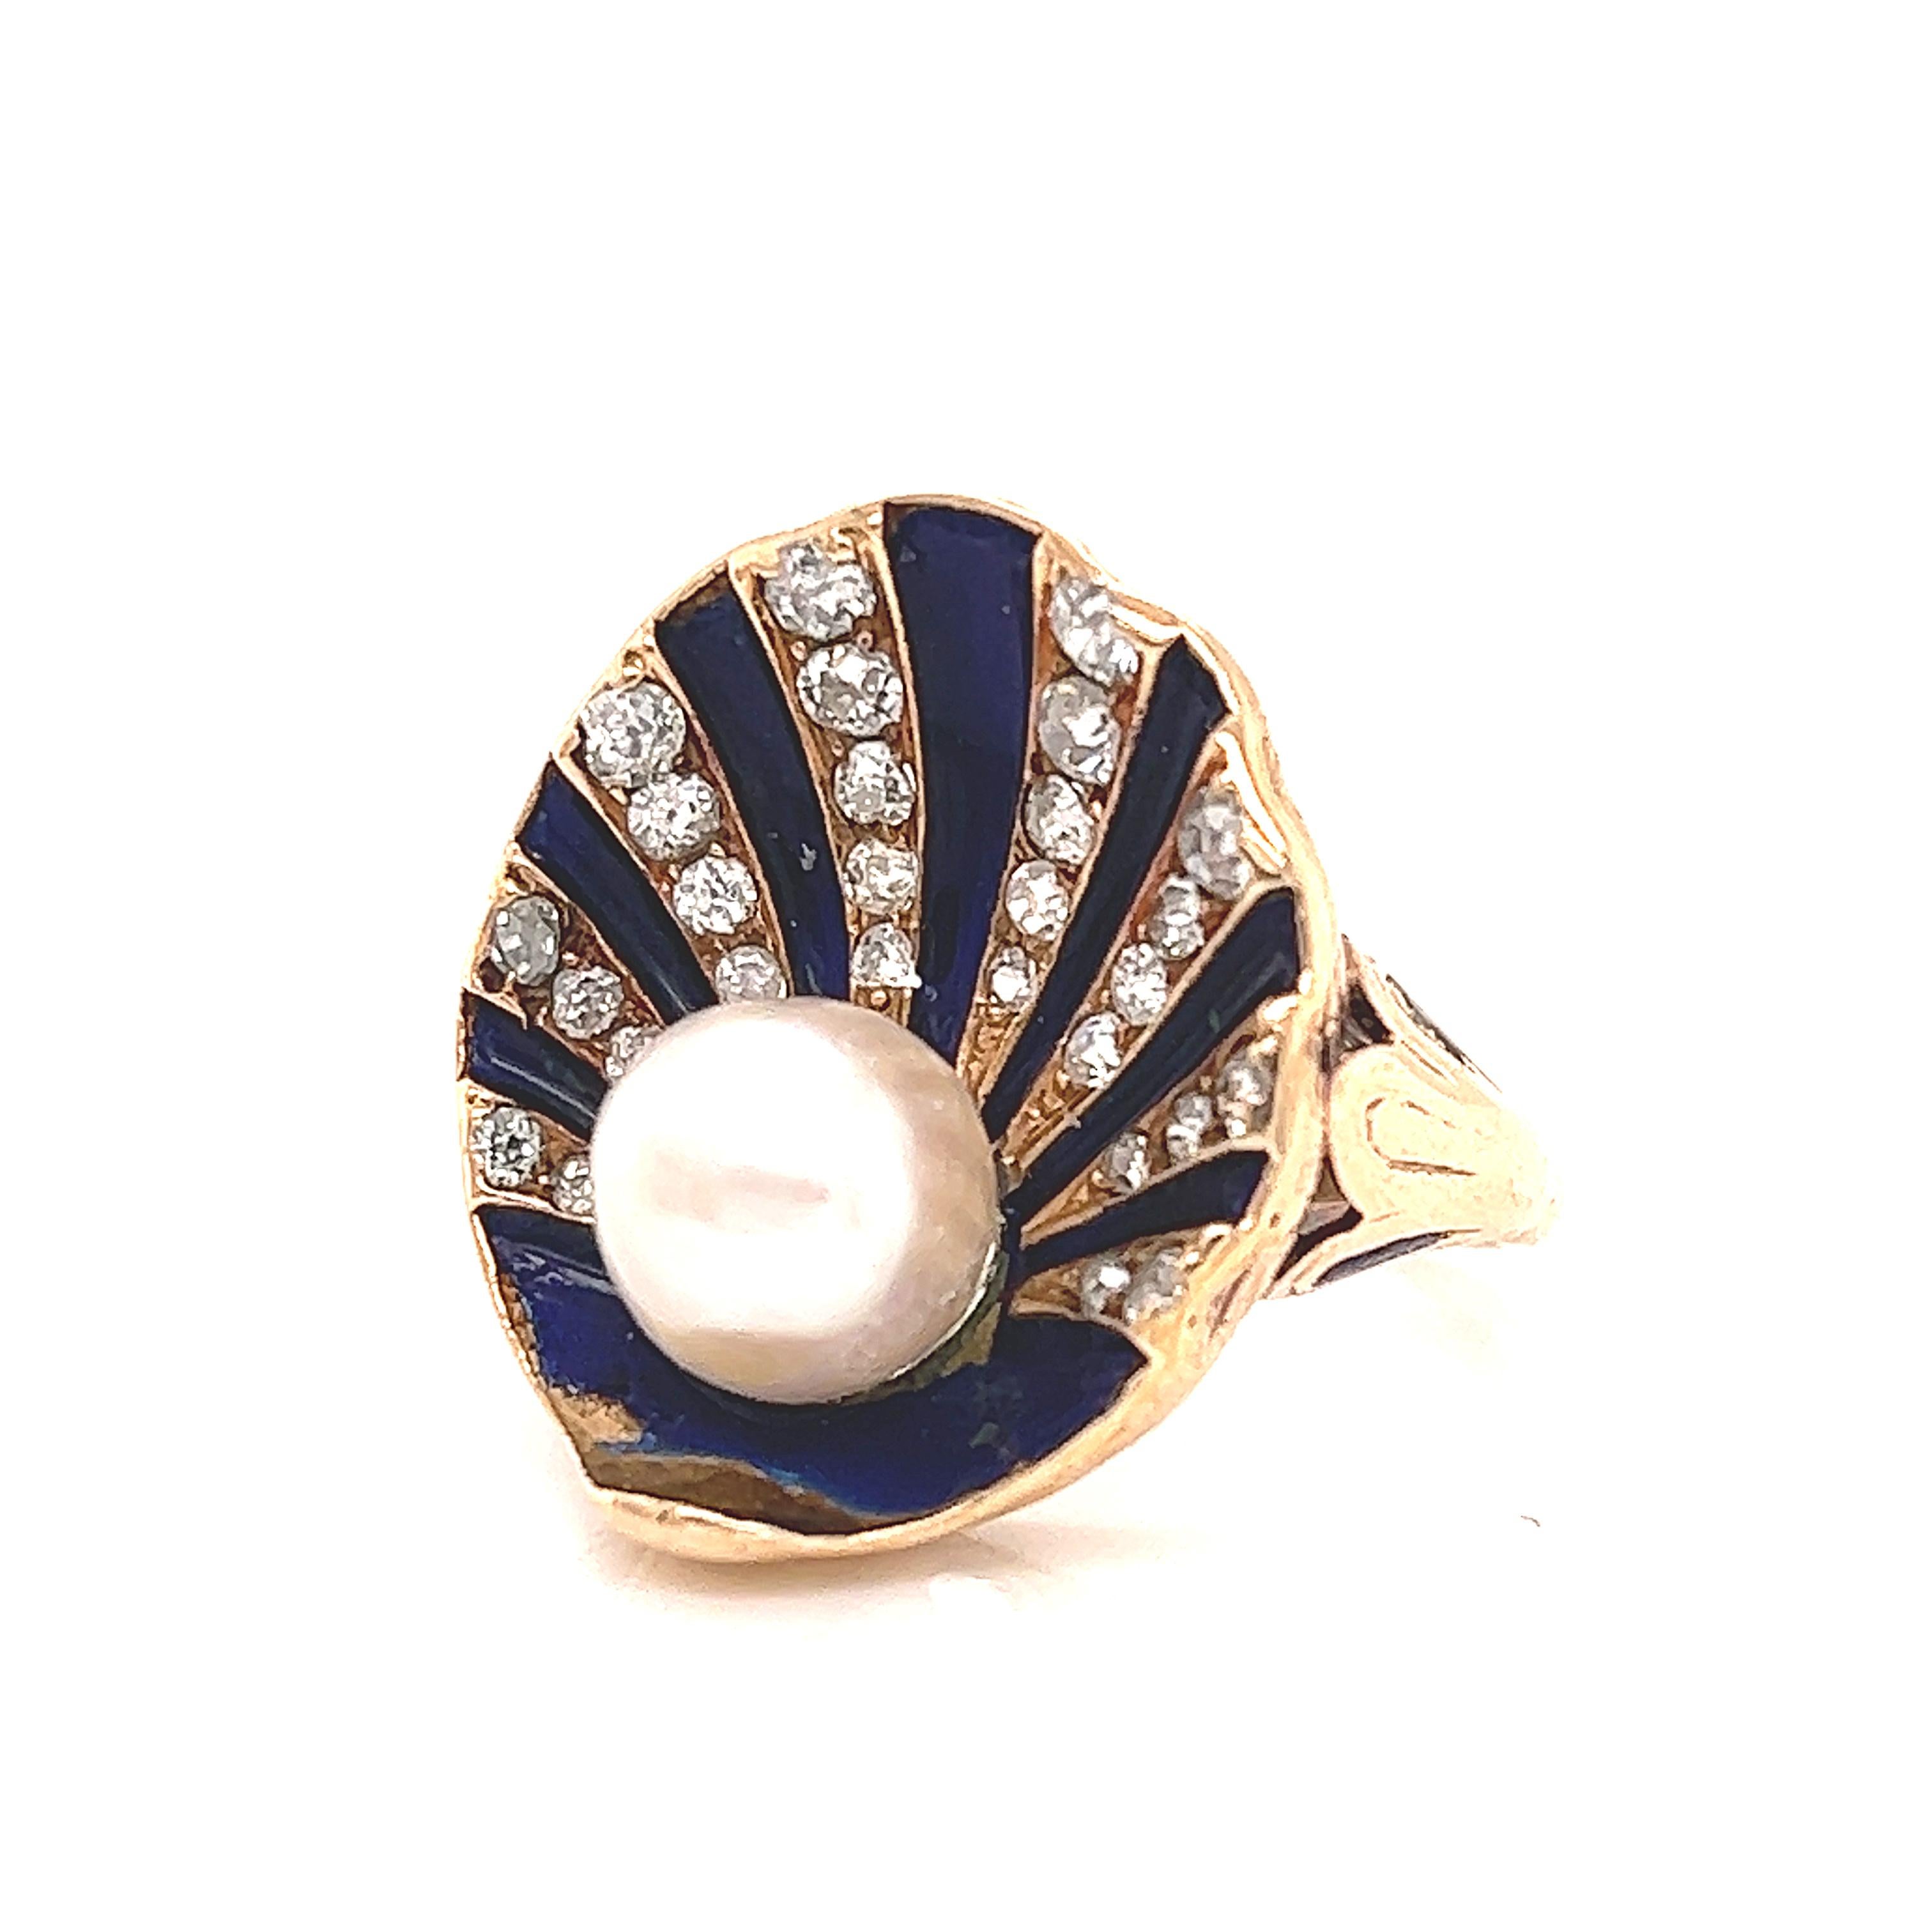 Old Mine Cut Art Nouveau Clamshell Enamel Pearl & Diamond Cocktail Ring